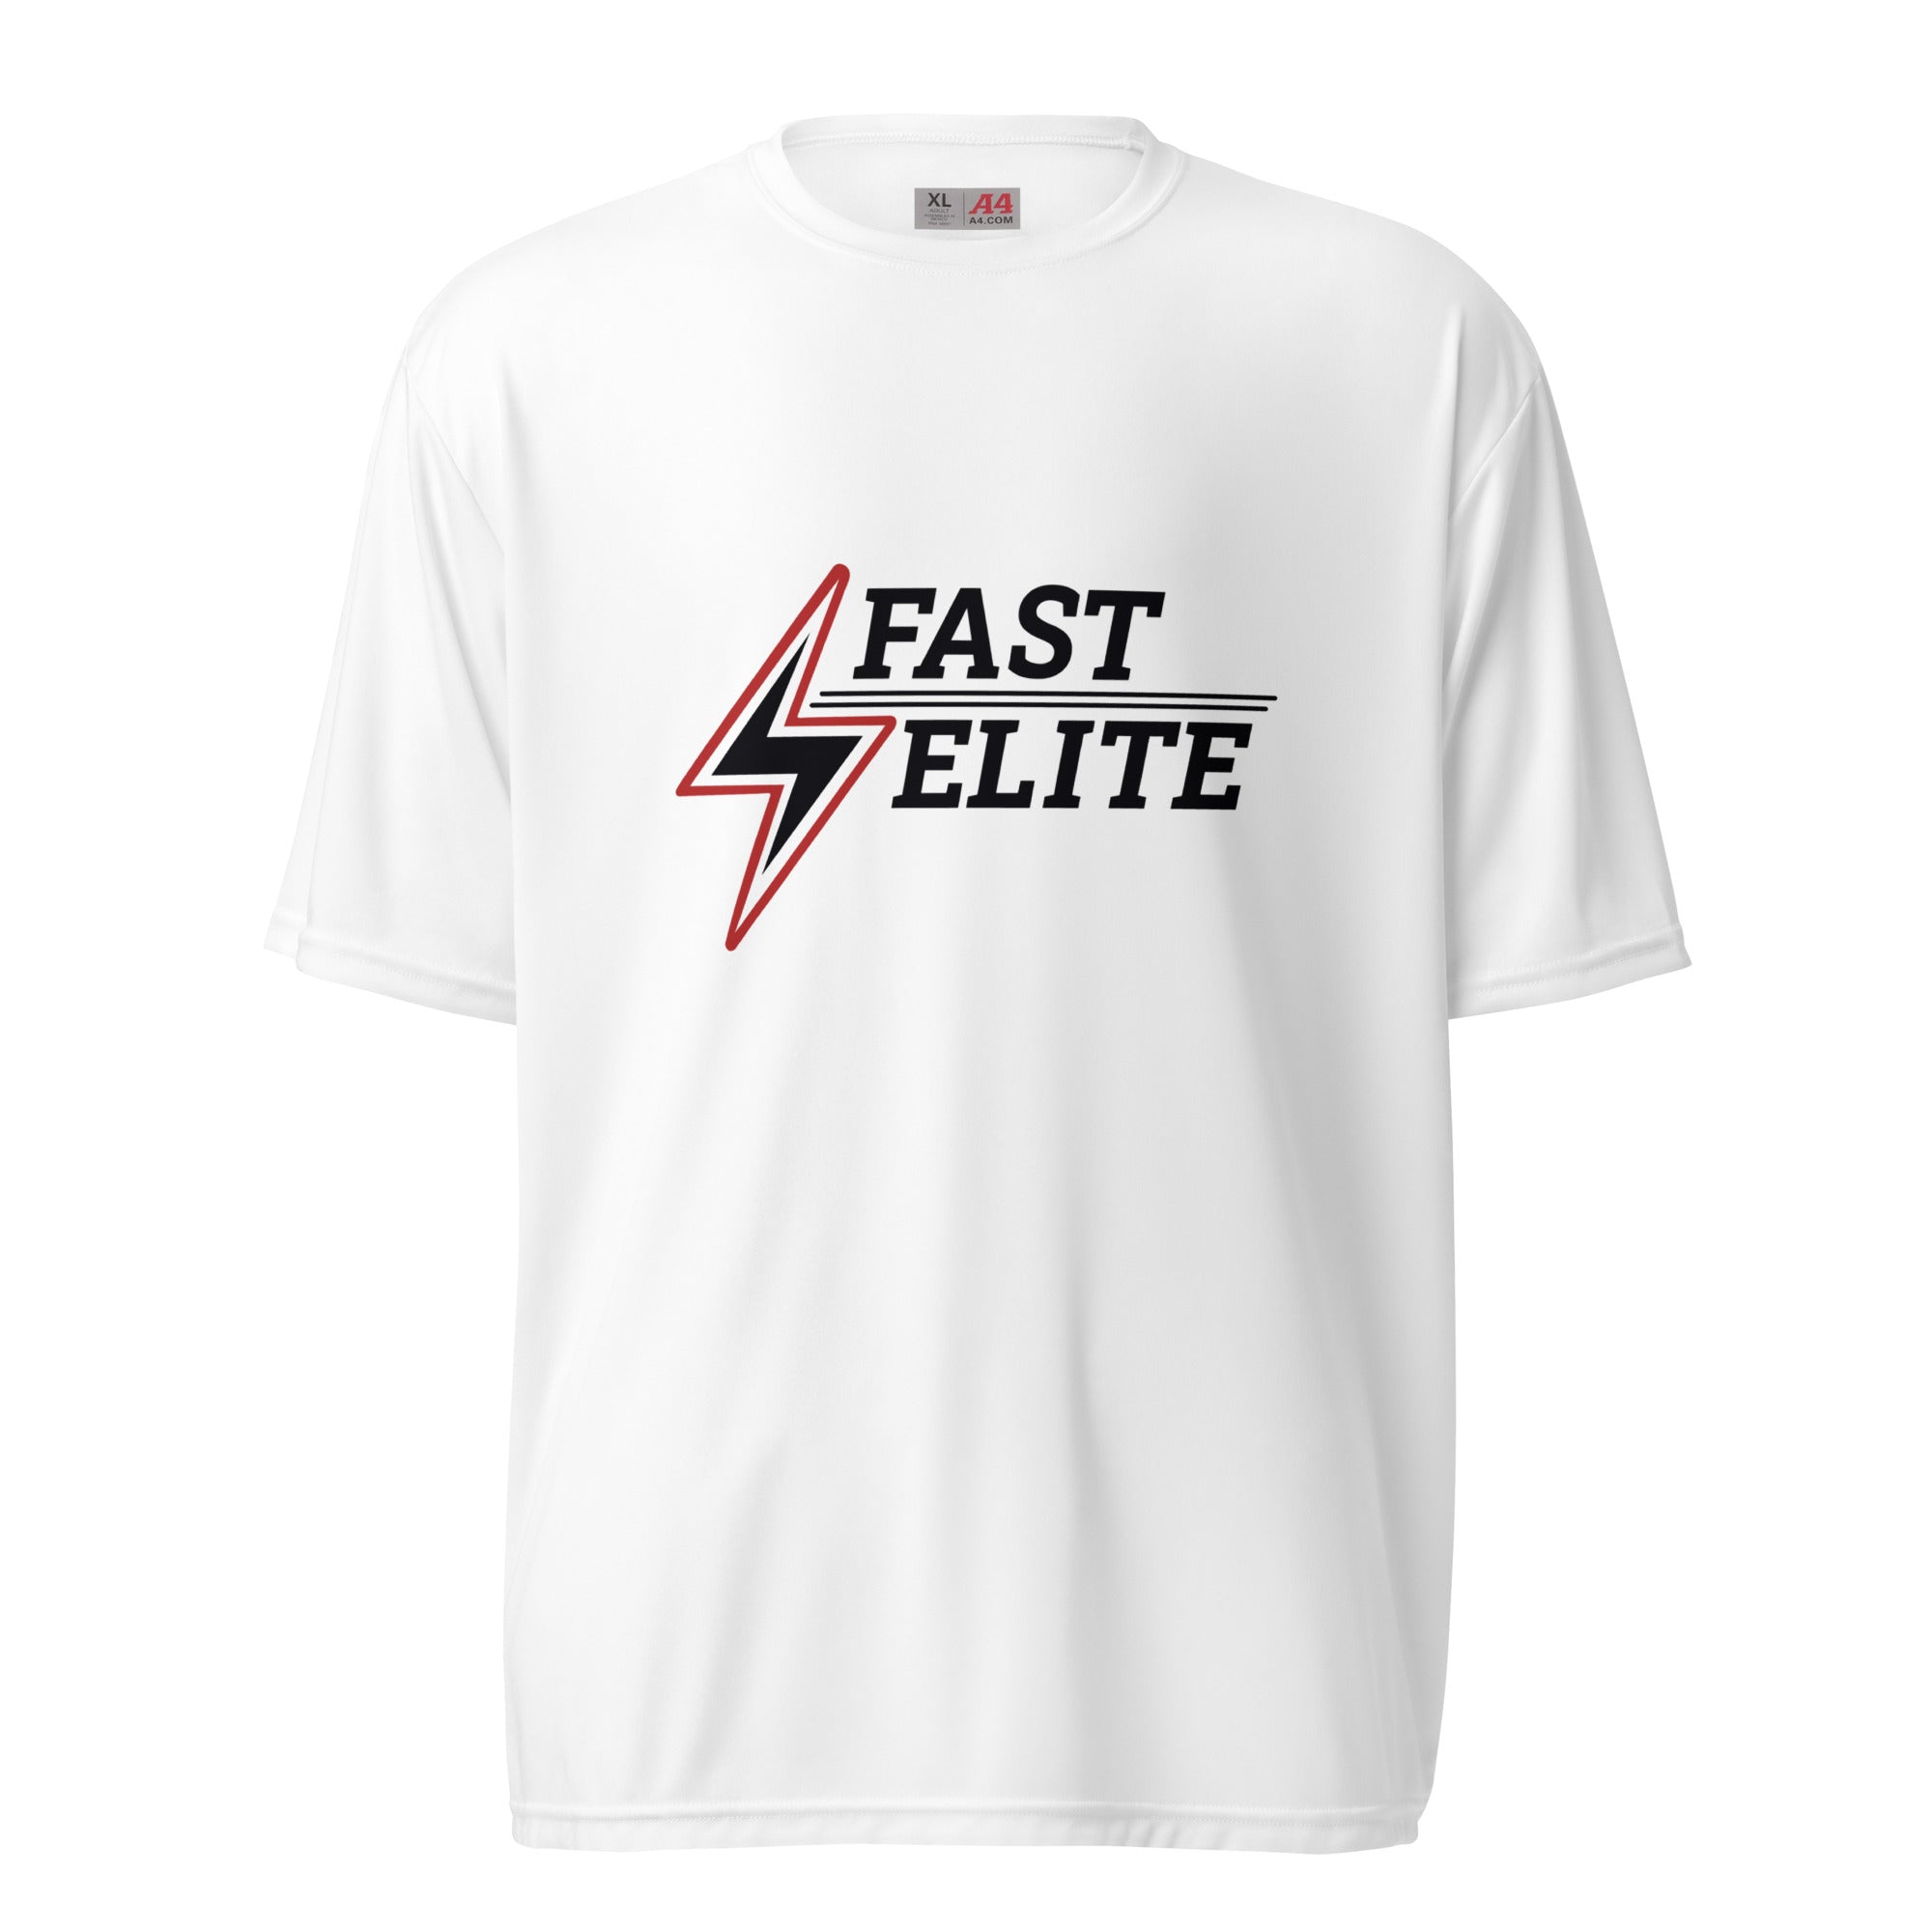 Fast Elite Unisex performance crew neck t-shirt